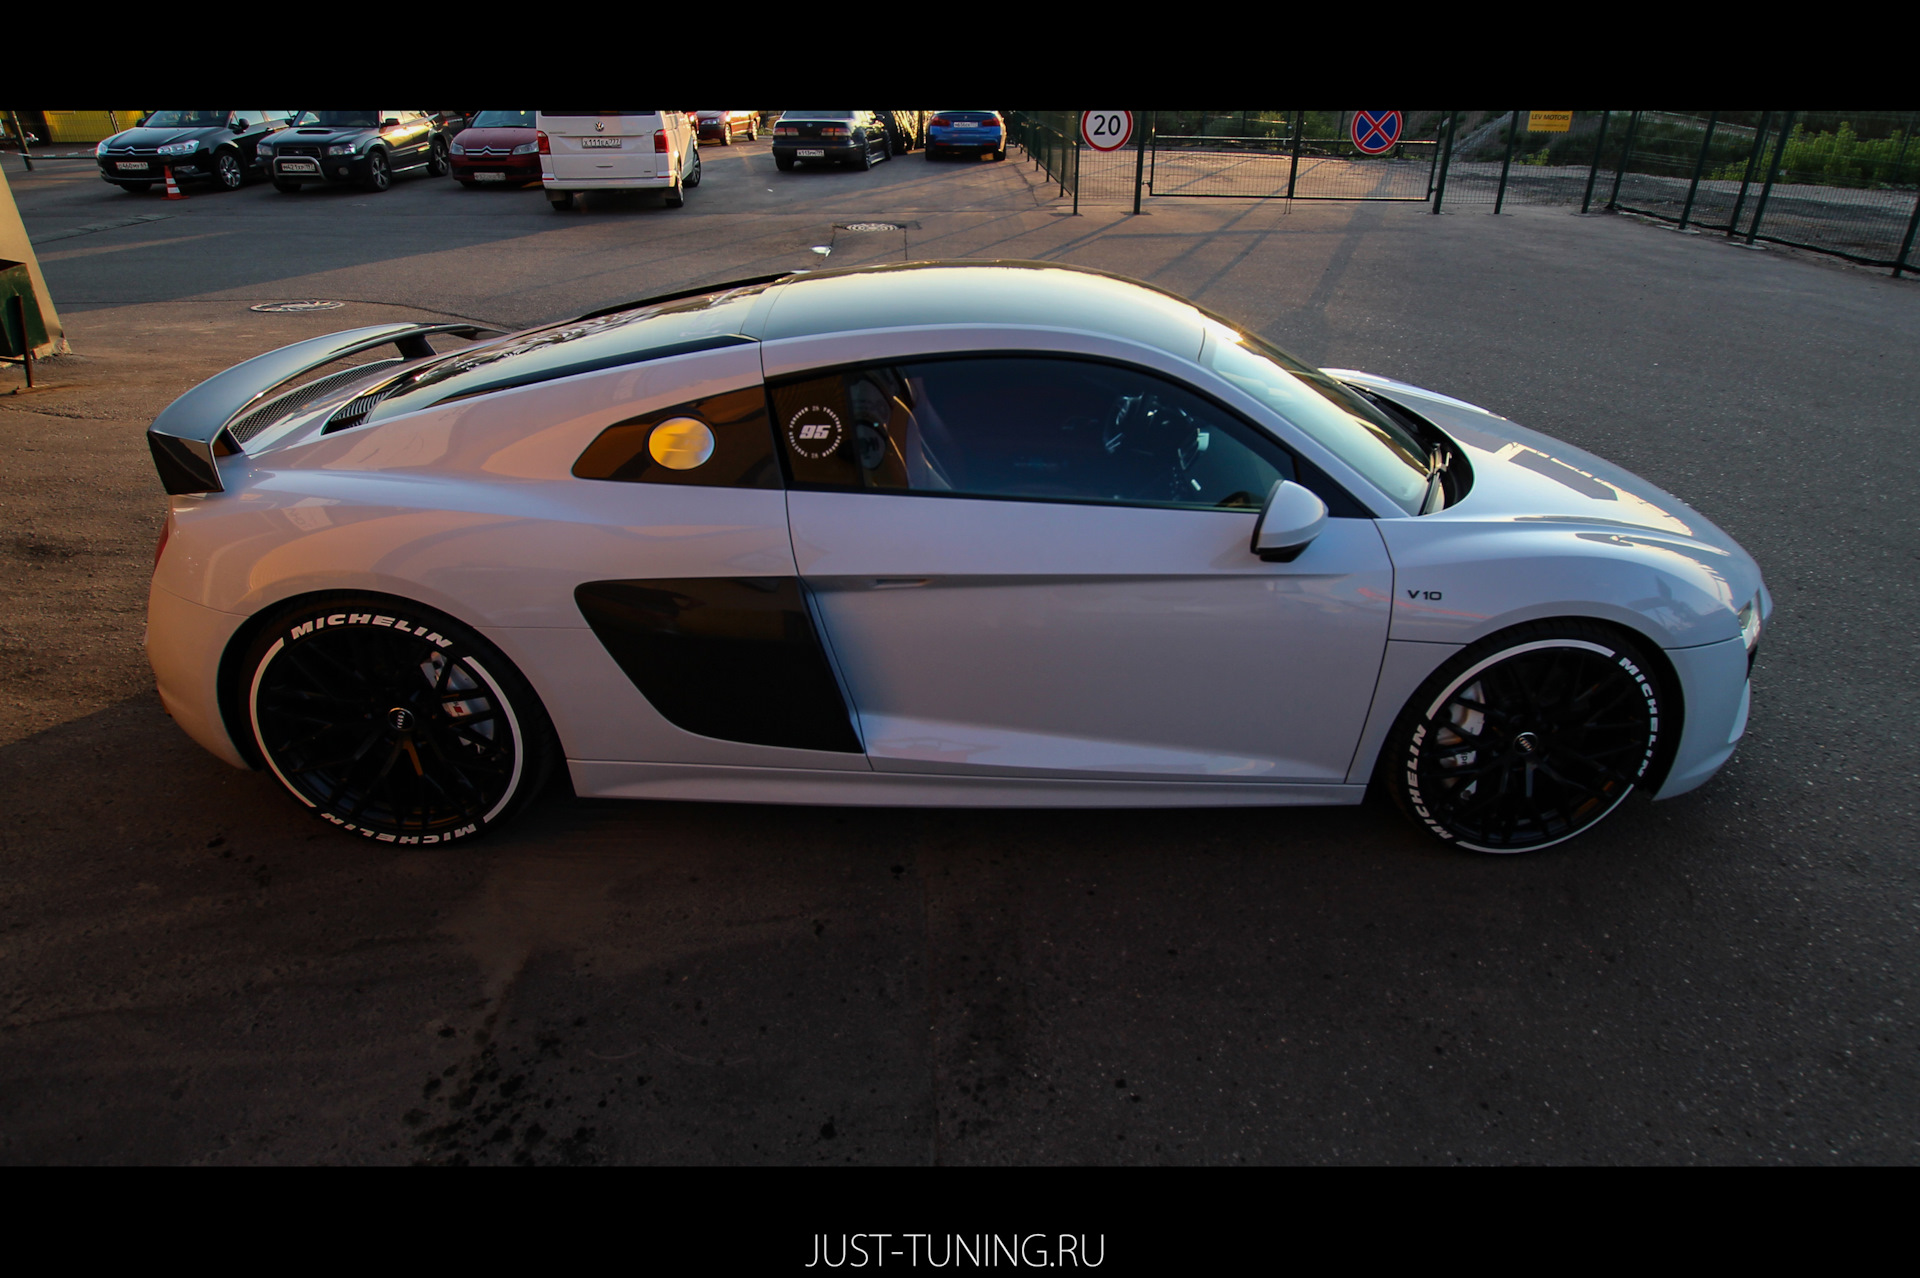 Just tune. Just Tuning. Audi r8 Москва в плёнке с рисунком на шинах фото. Audi r8 Москва рисунок на шинах фото.